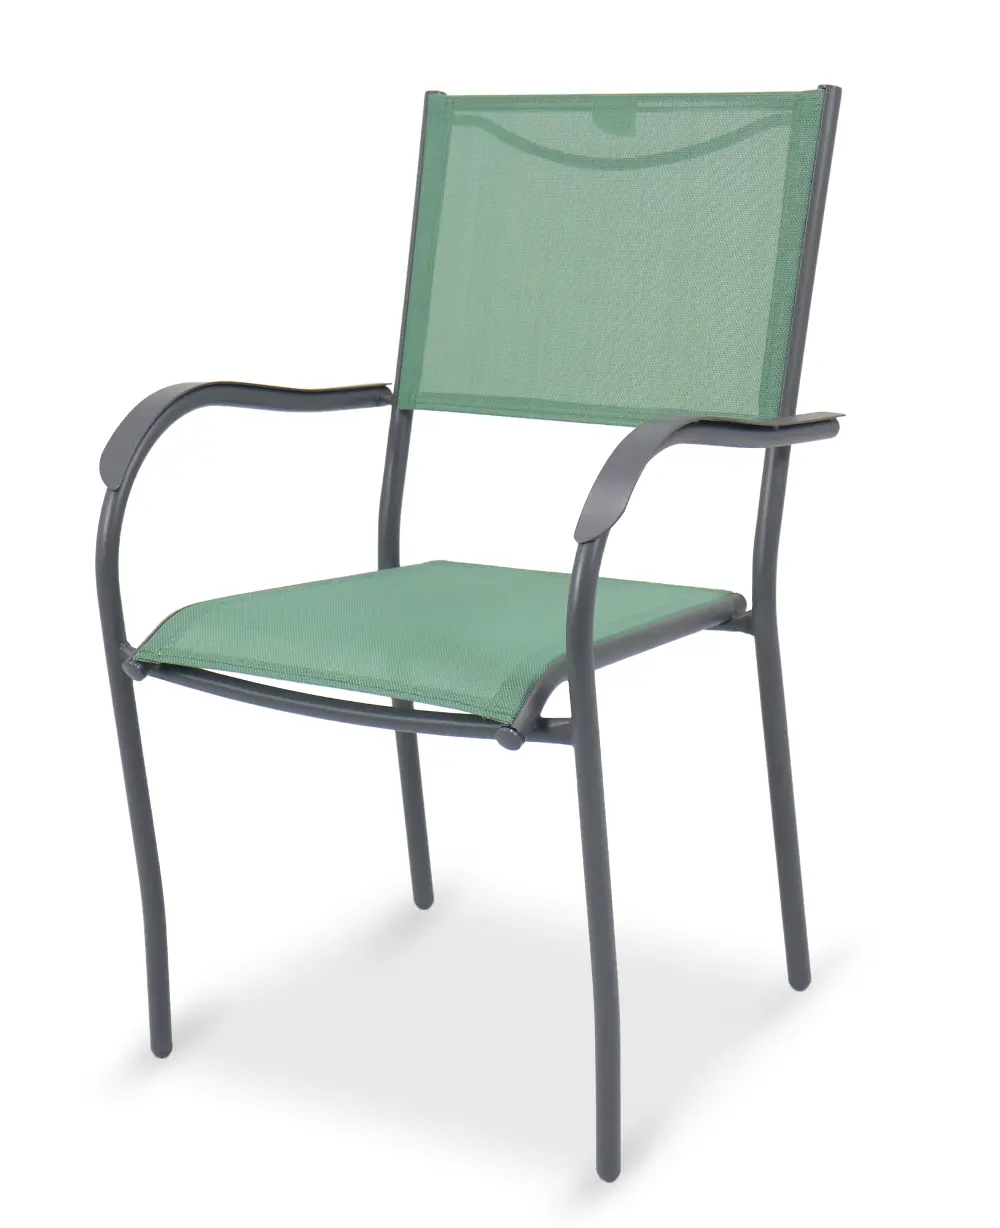 Outdoor Patio Chair in Green - Genevieve-1